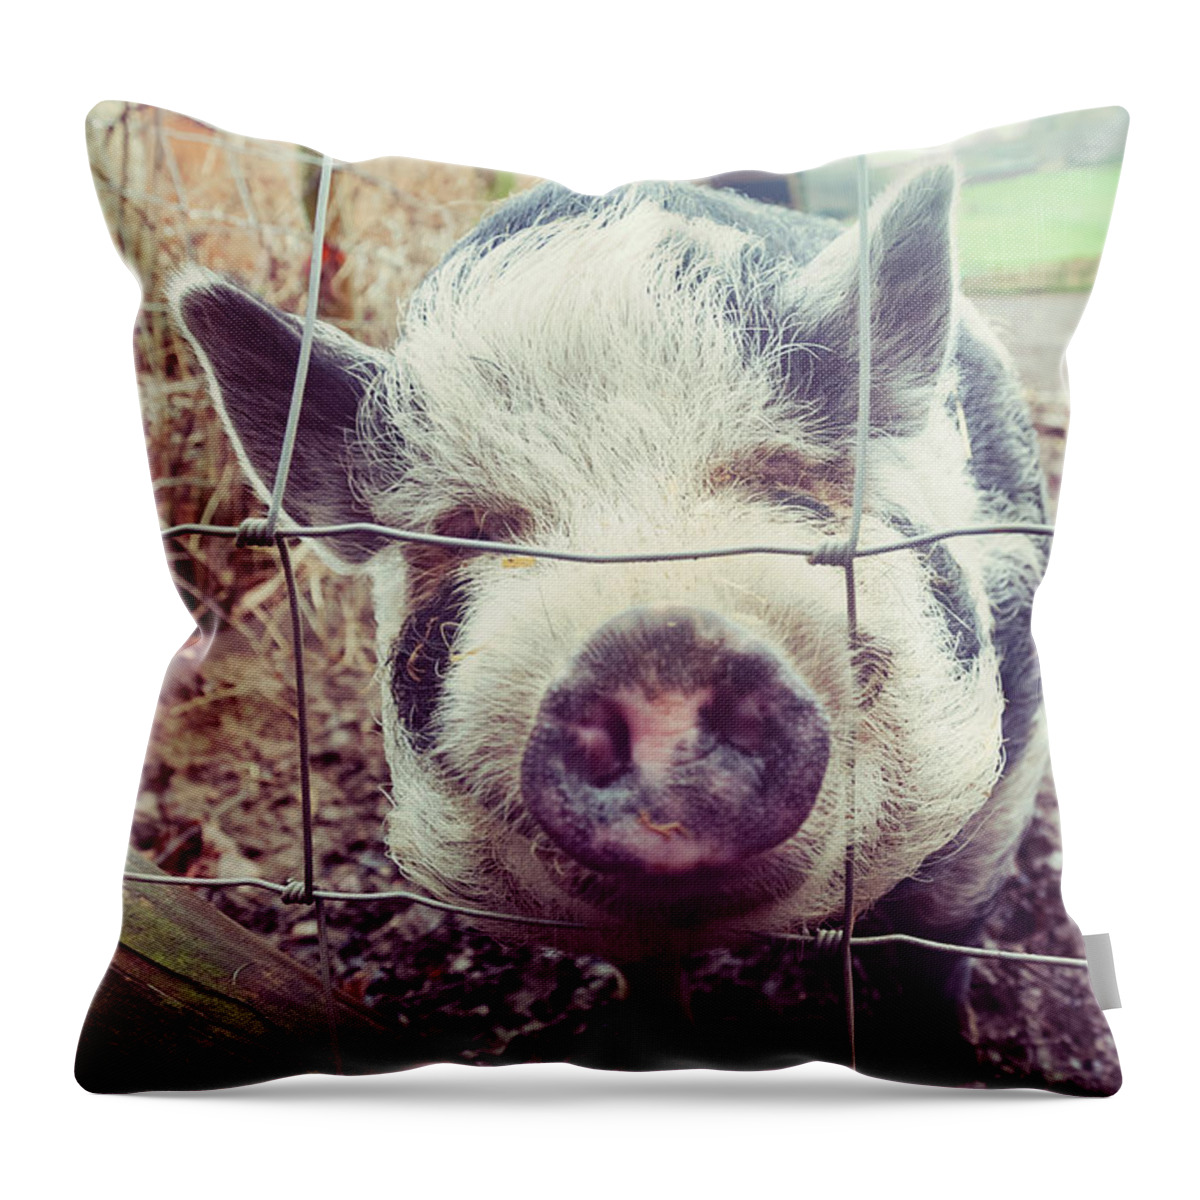 D90 Throw Pillow featuring the photograph Pig by Mariusz Talarek